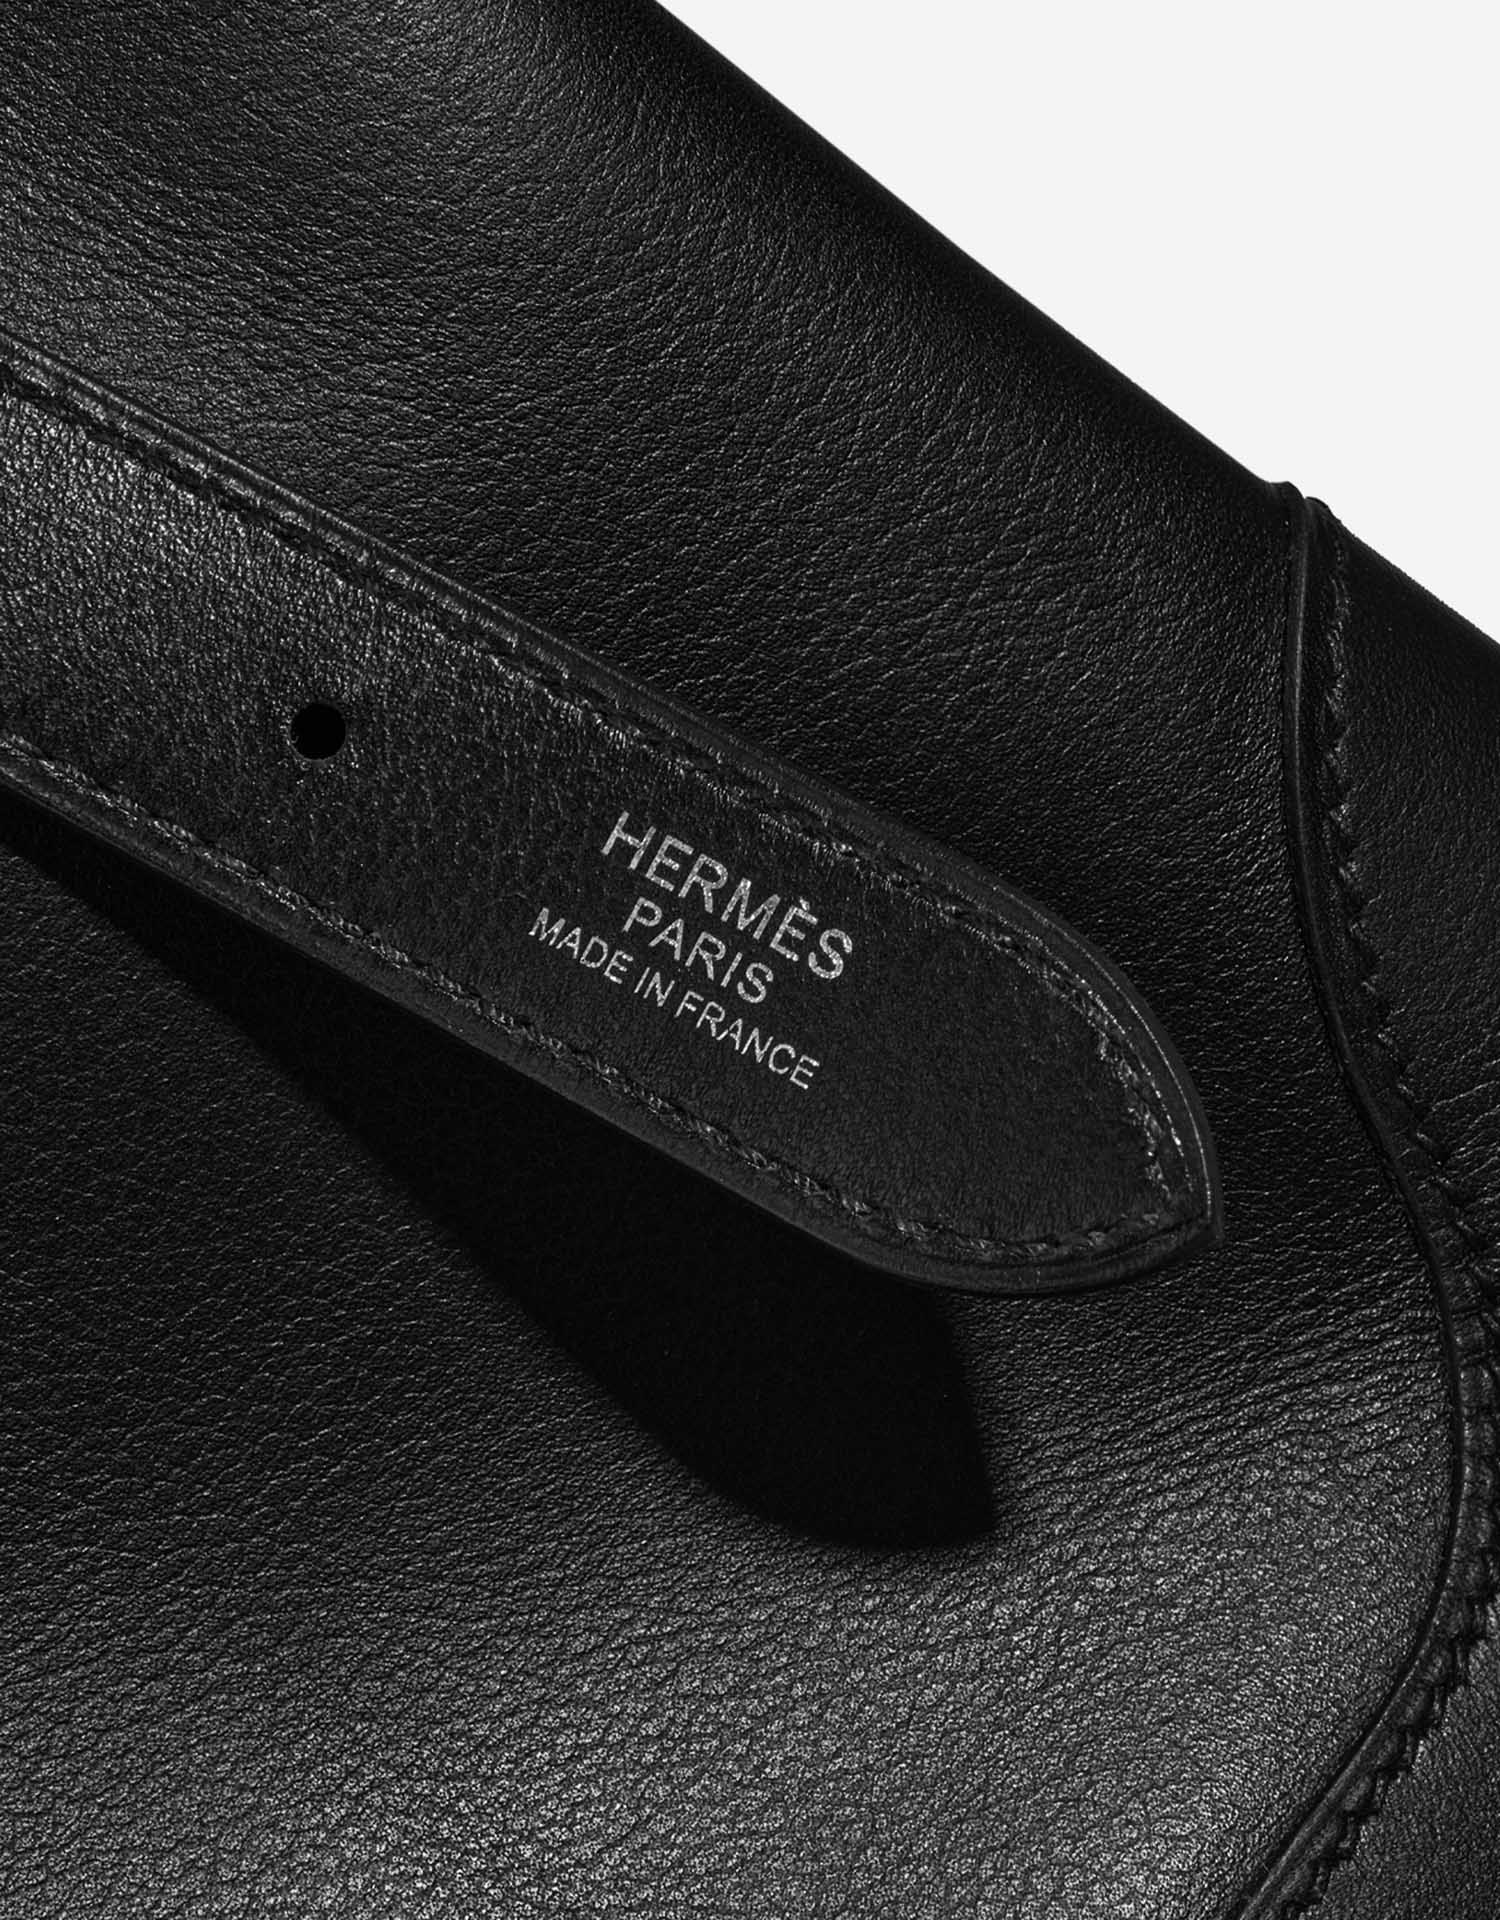 Pre-owned Hermès bag Trim Duo 24 Evercolor Black Black Logo | Sell your designer bag on Saclab.com